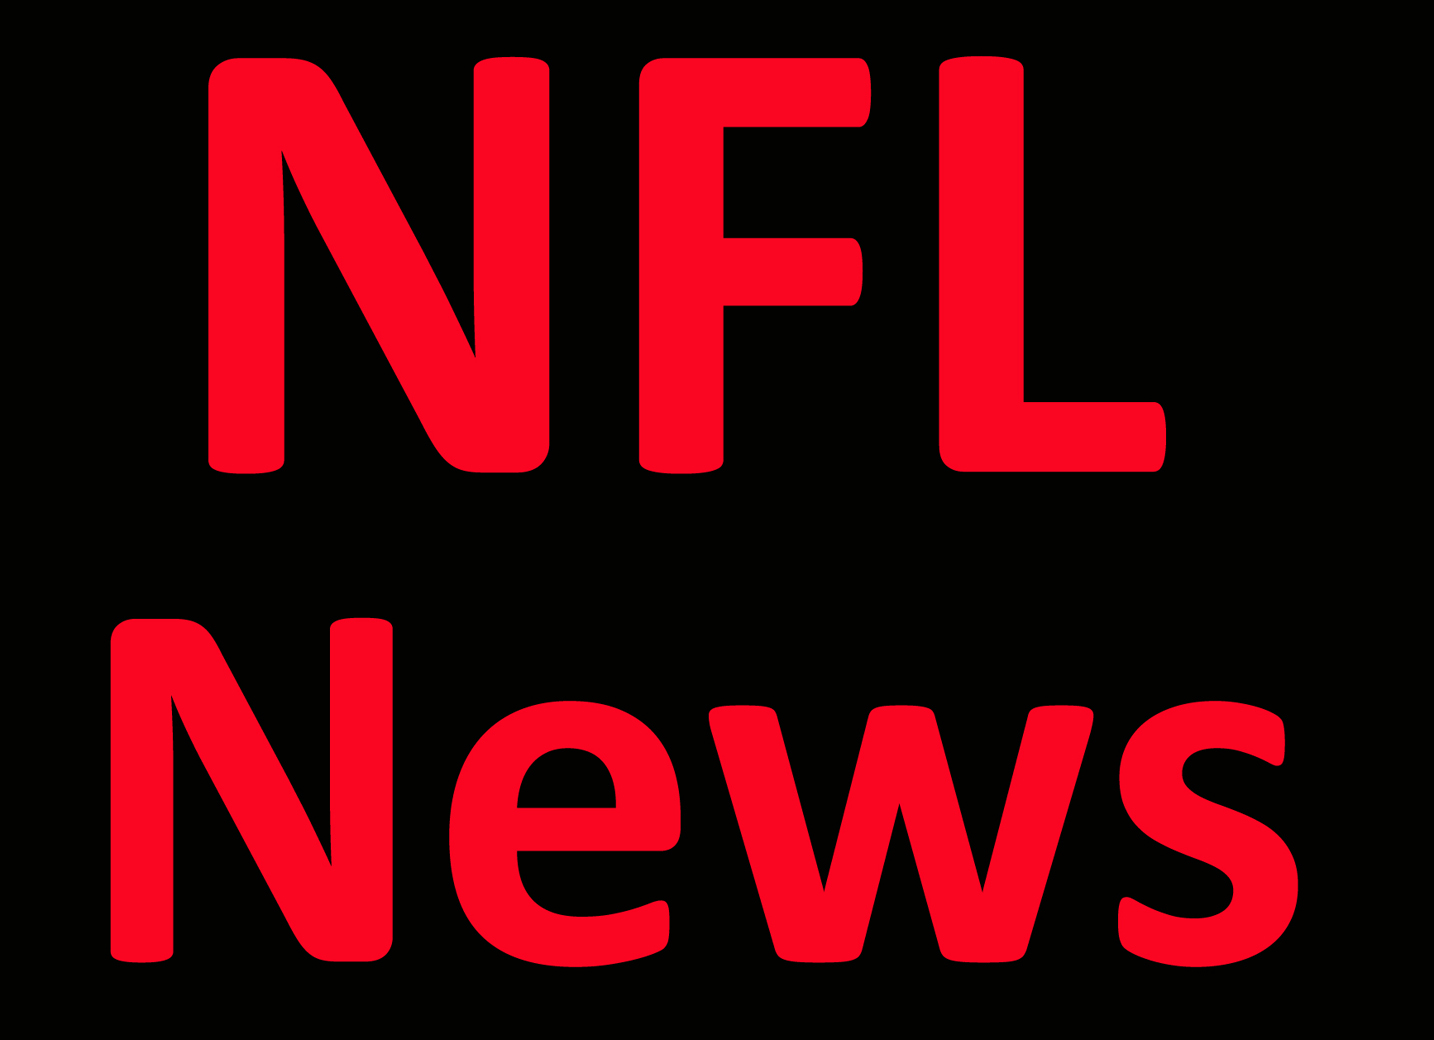 NFL News: Jets’ Saleh ‘not surprised’ by Rex Ryan criticism Per Report